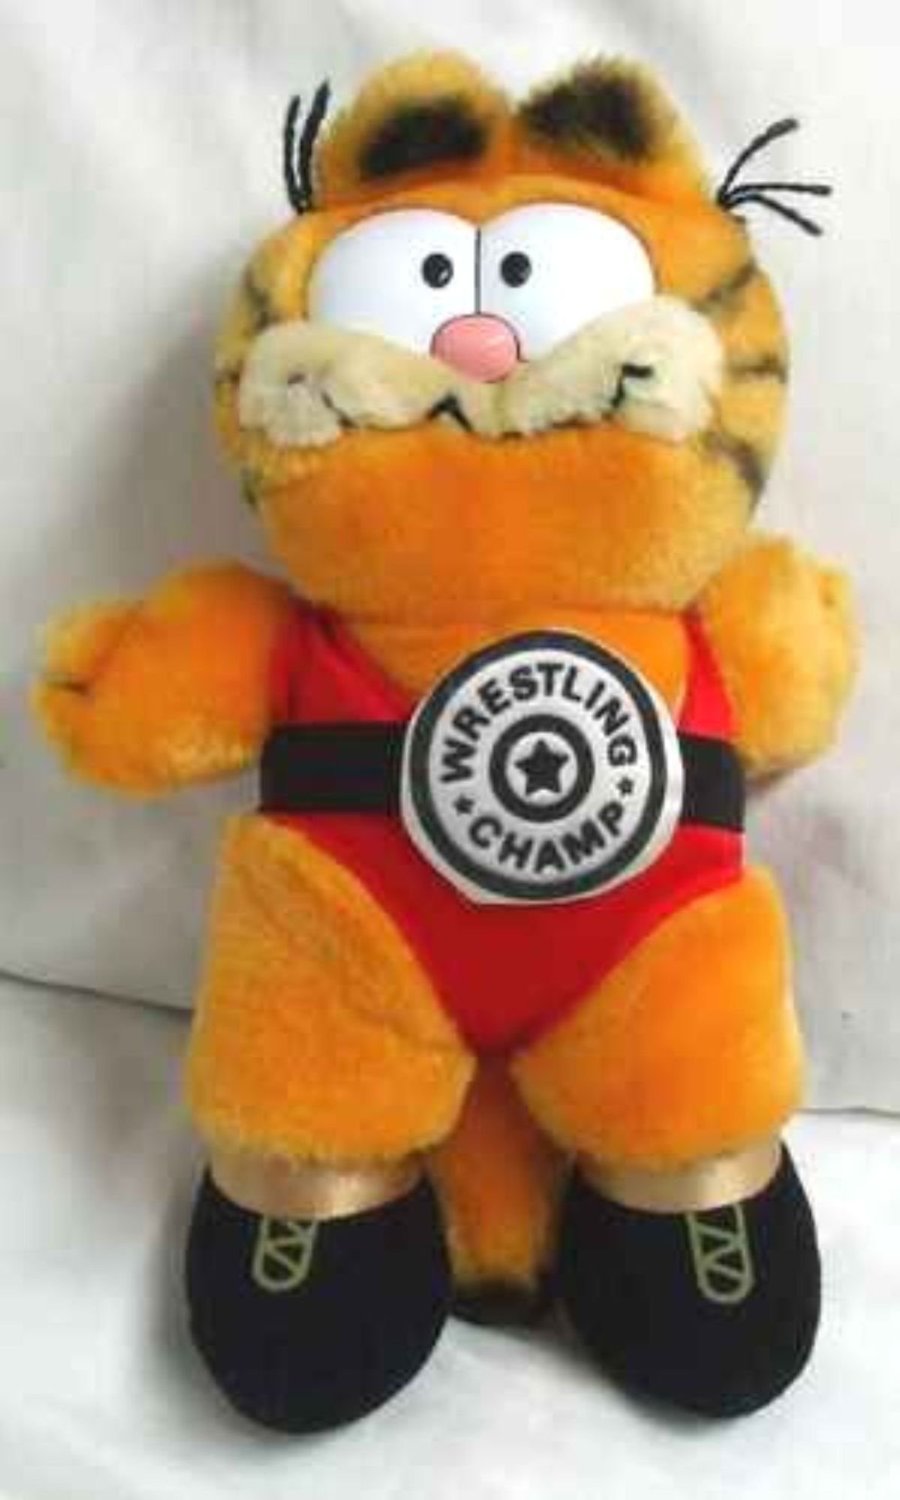 Garfield wrestler plush